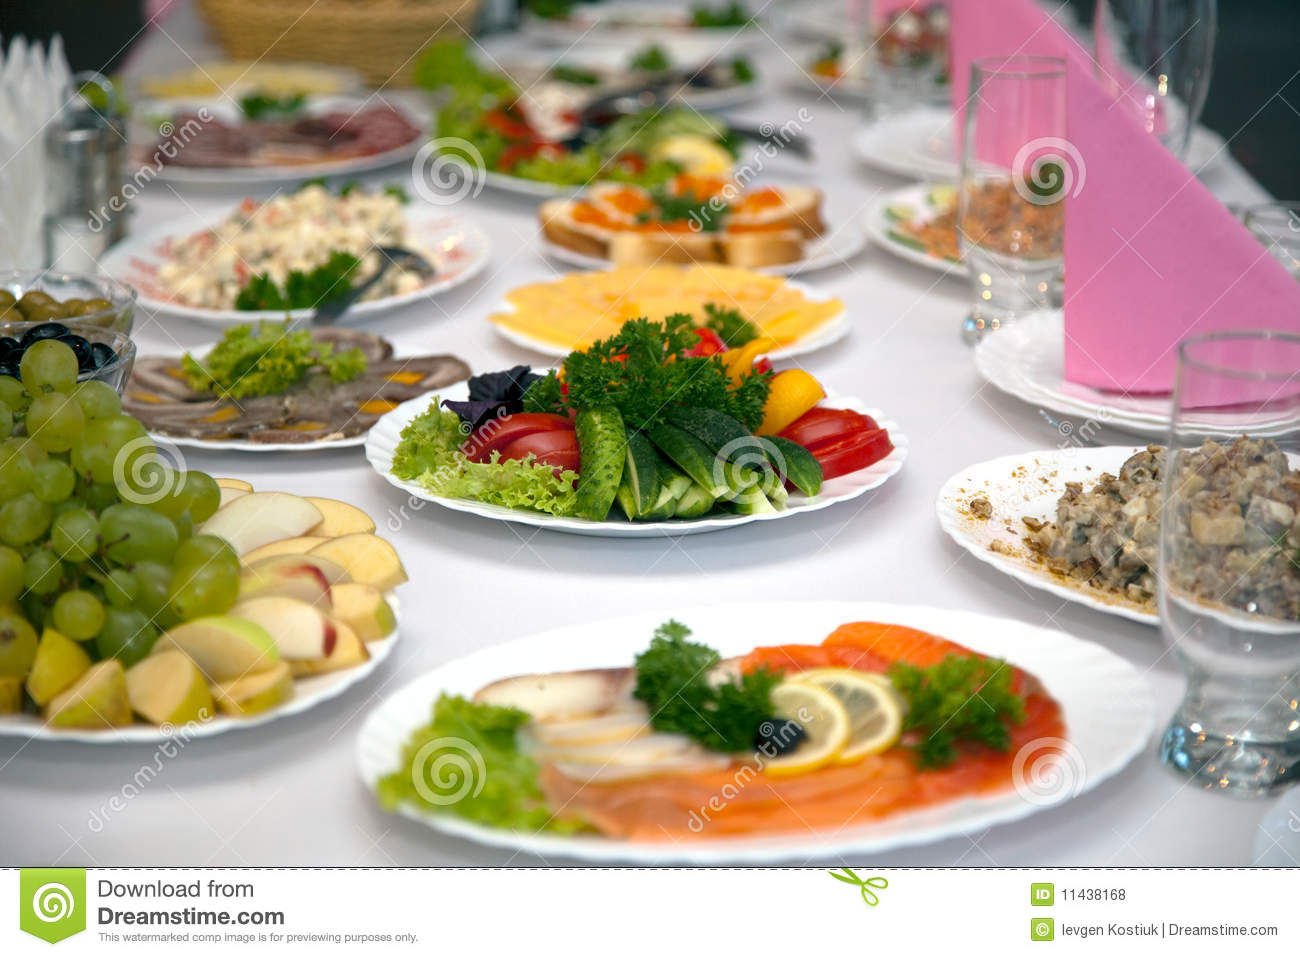 Food At Banquet Table Royalty Free Stock Photos   Image  11438168